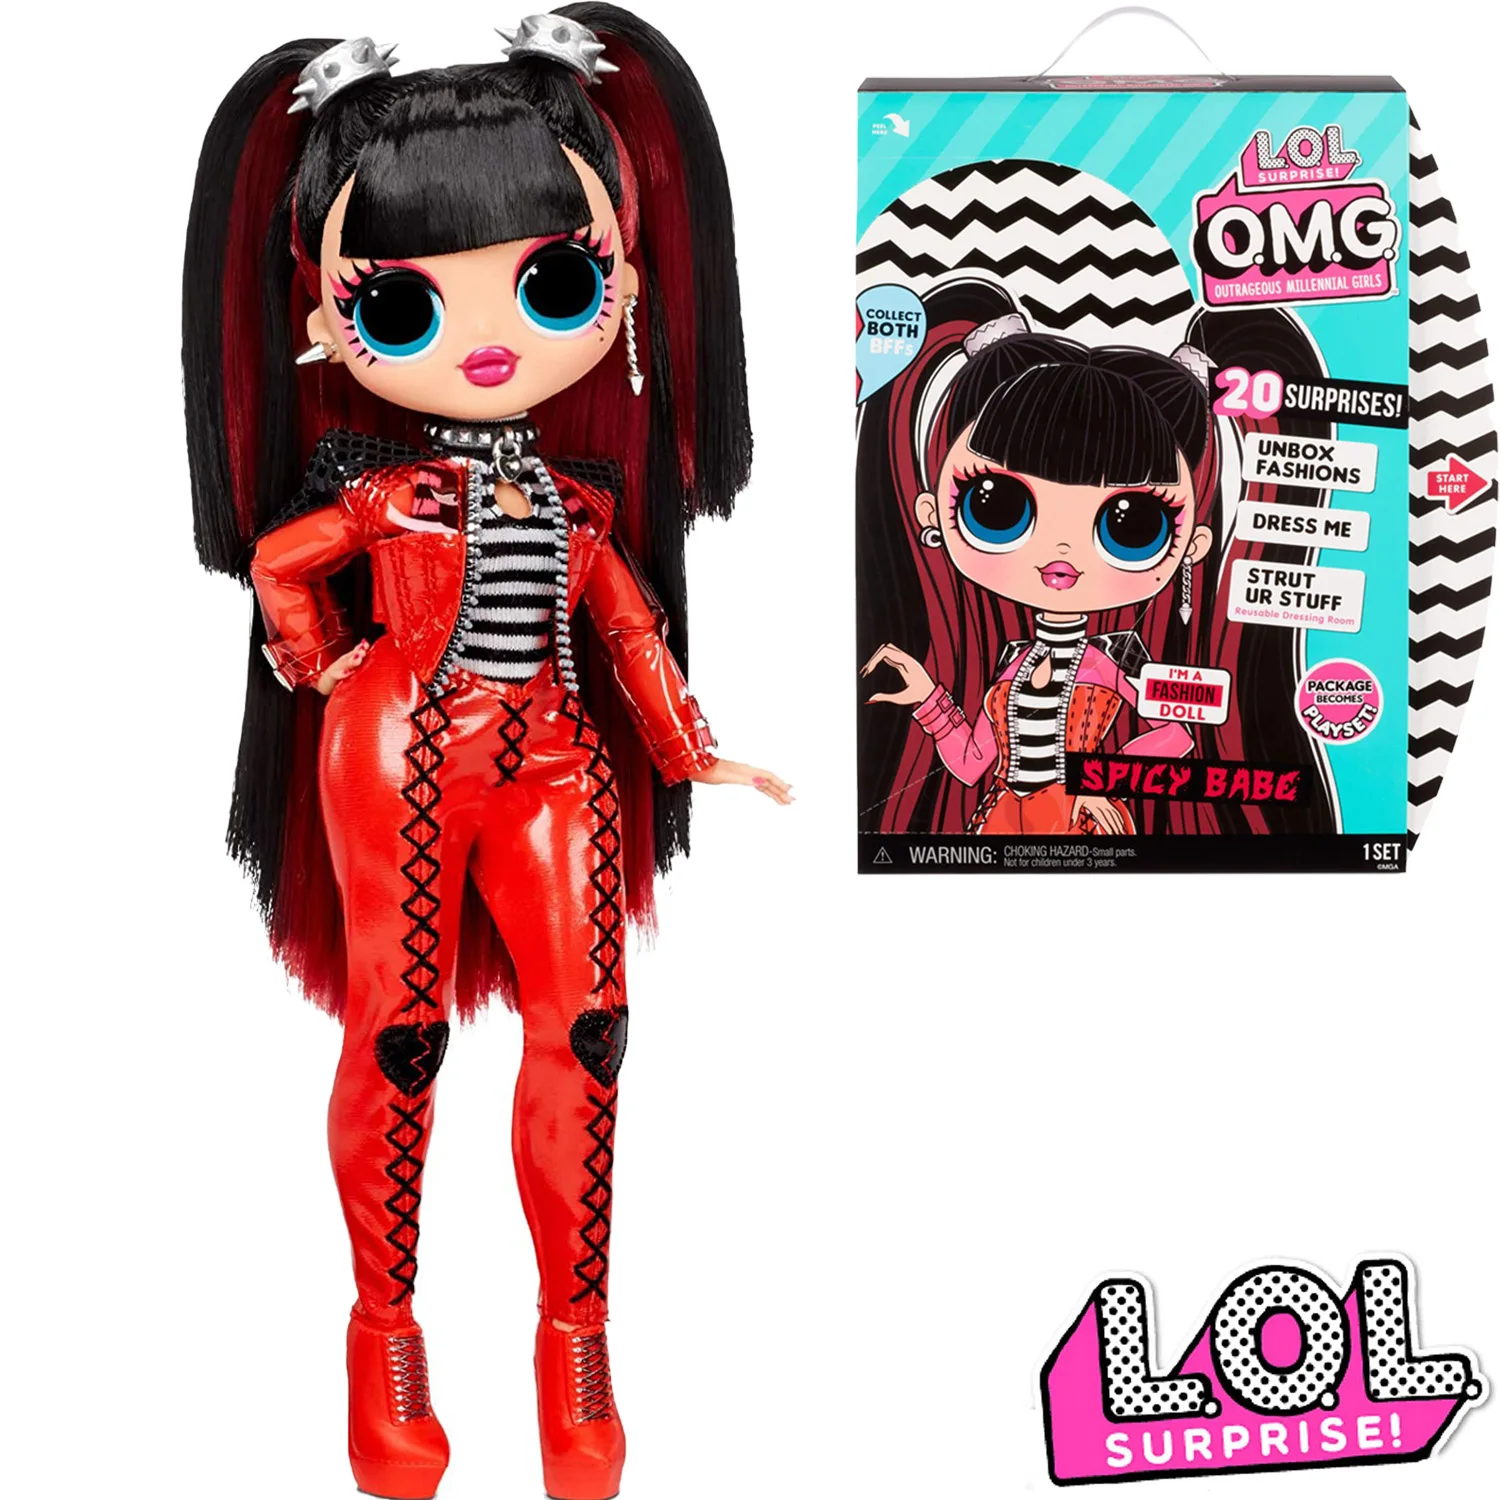 

NEW LOL Dolls Lol Omg Original Surprise Dolls Blind Box Anime Figure Spicy Babe Lol Doll 10-Inch Toys For Girls Kids Toys Girls